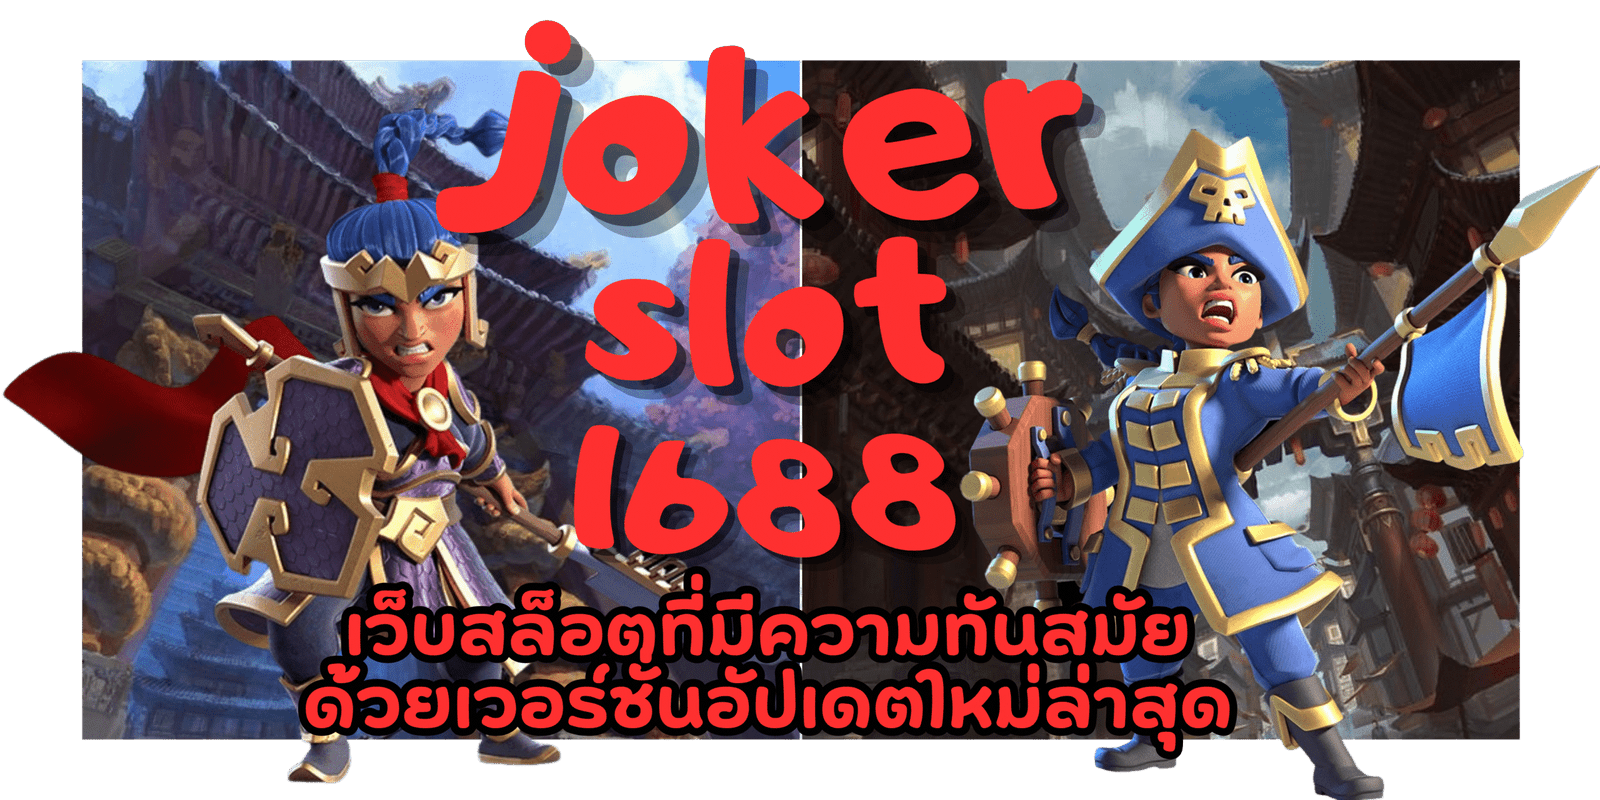 joker-slot1688-สมัครสมาชิก